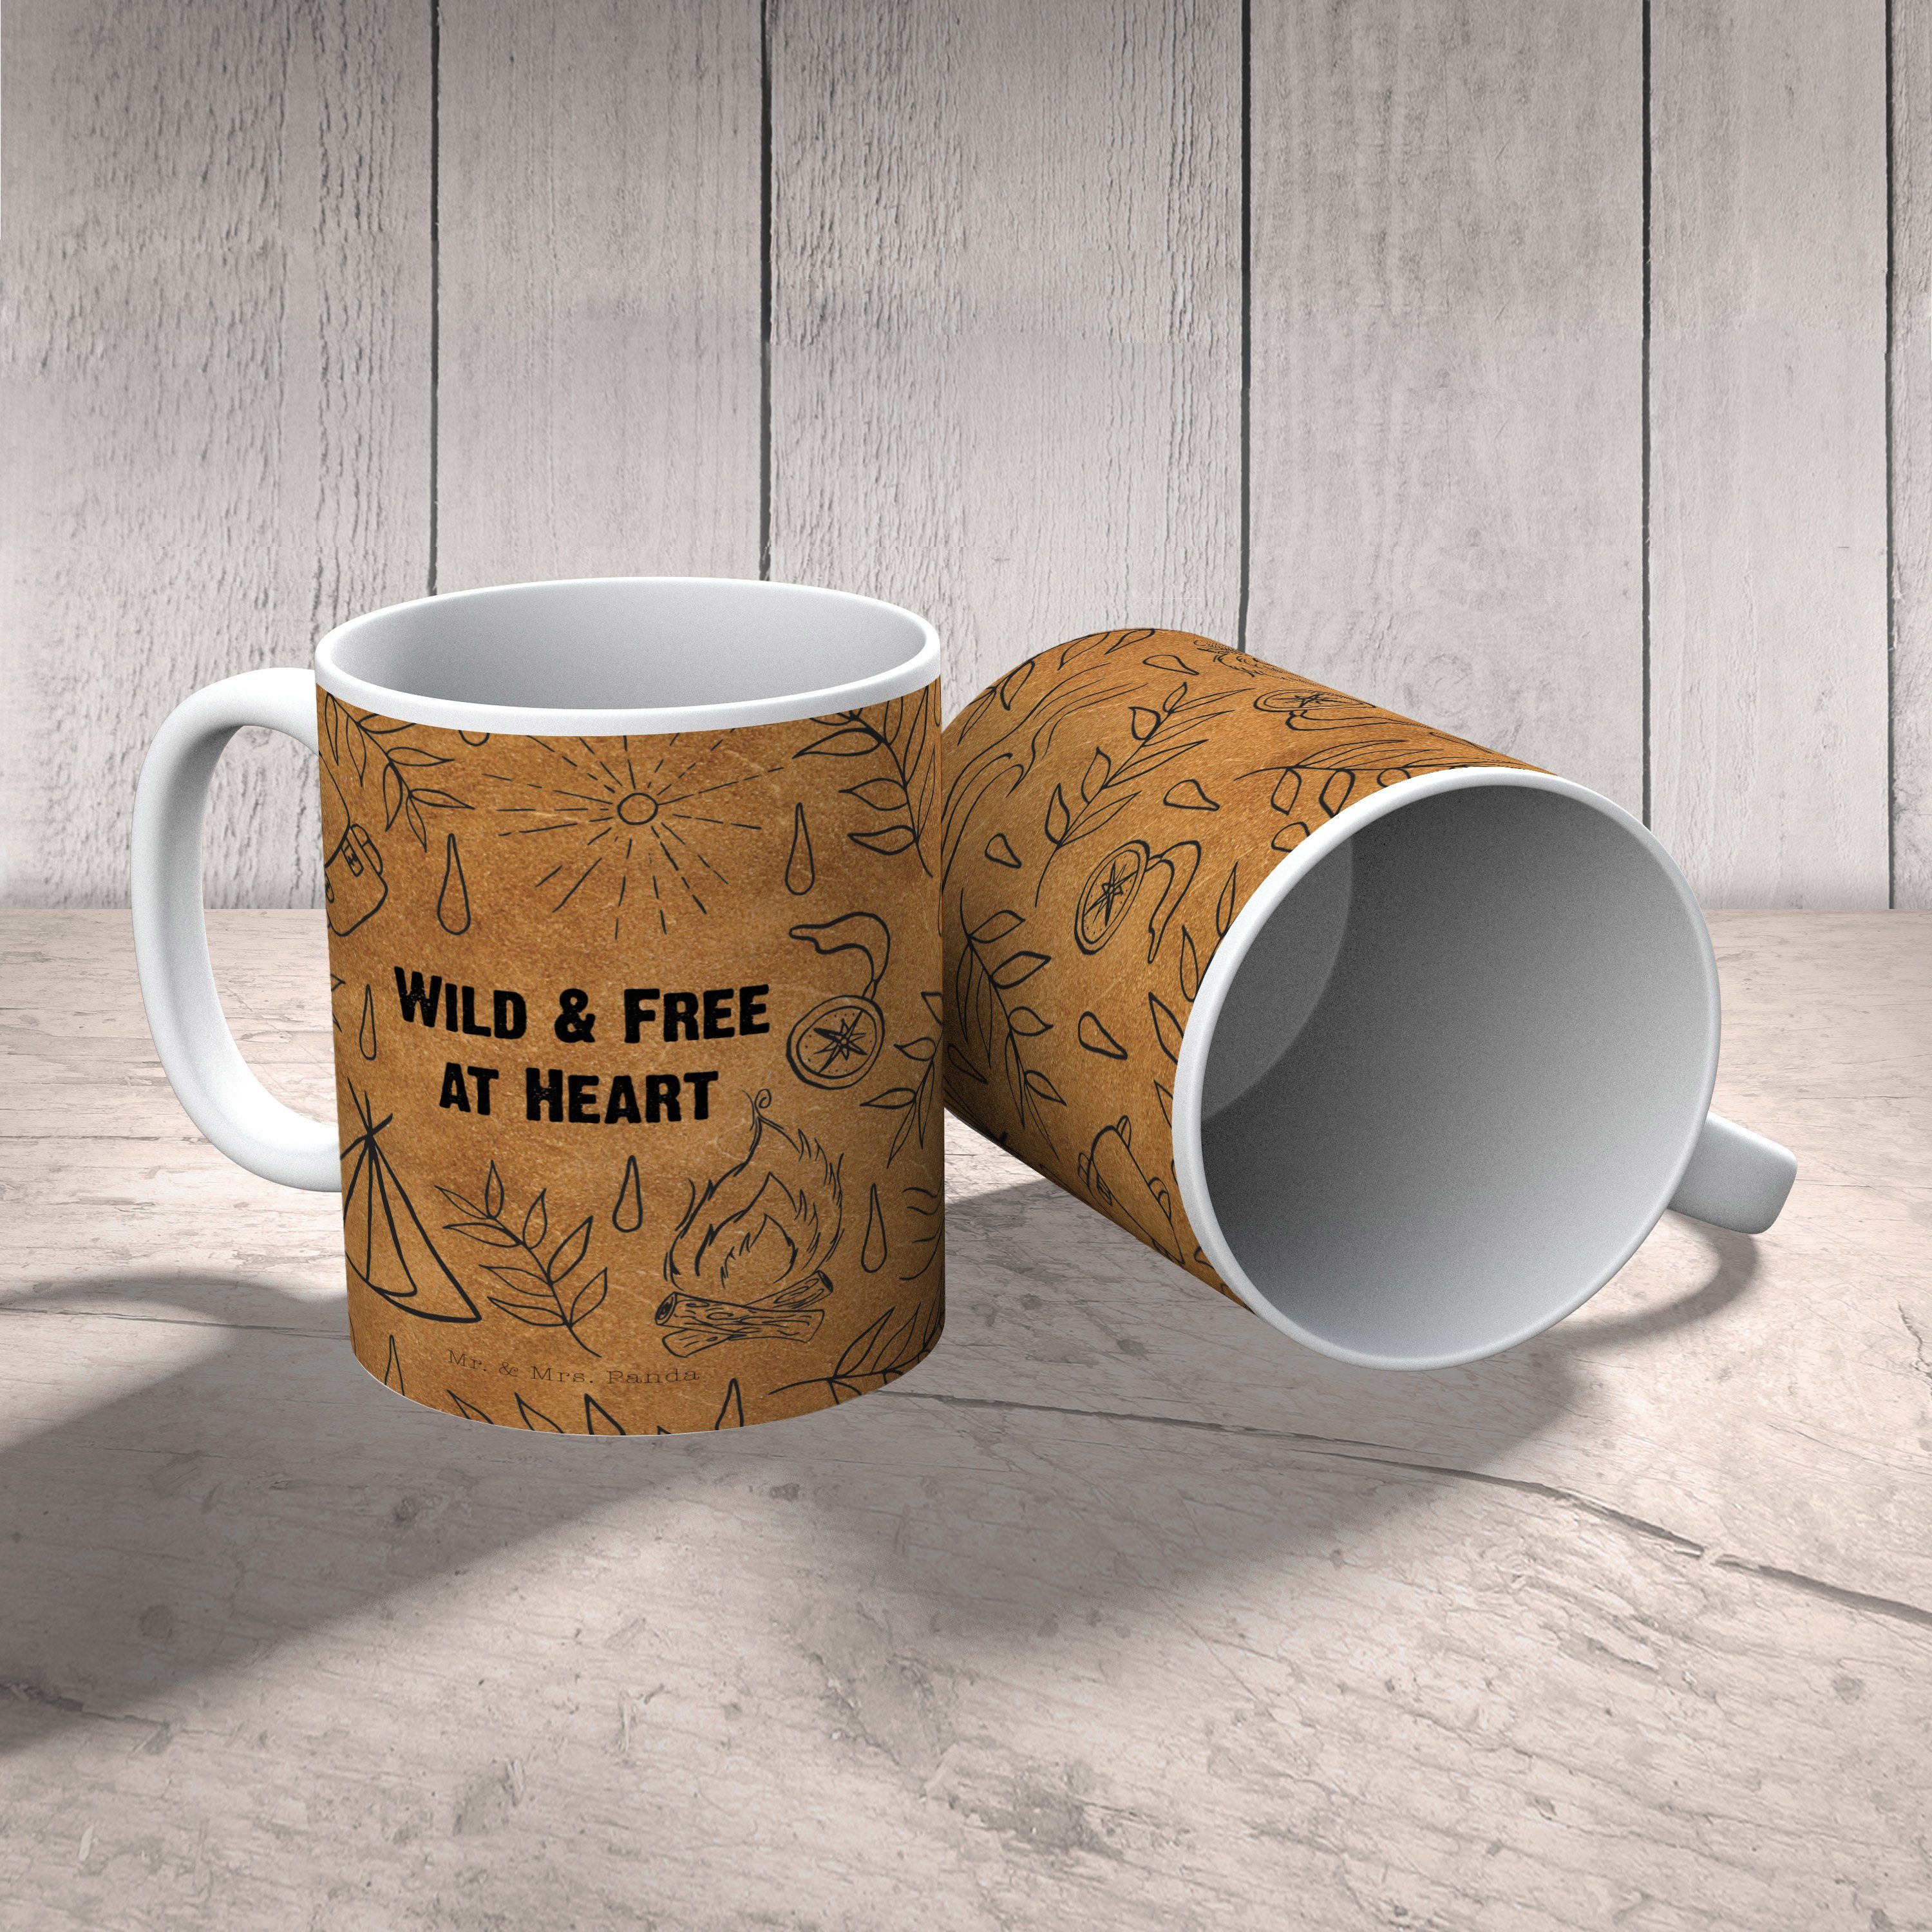 Free Mrs. & Panda Leather - Geschenk Keramik Tasse p, Kaffeetasse, Tasse, Wild Geschenk, Tasse, & Mr.